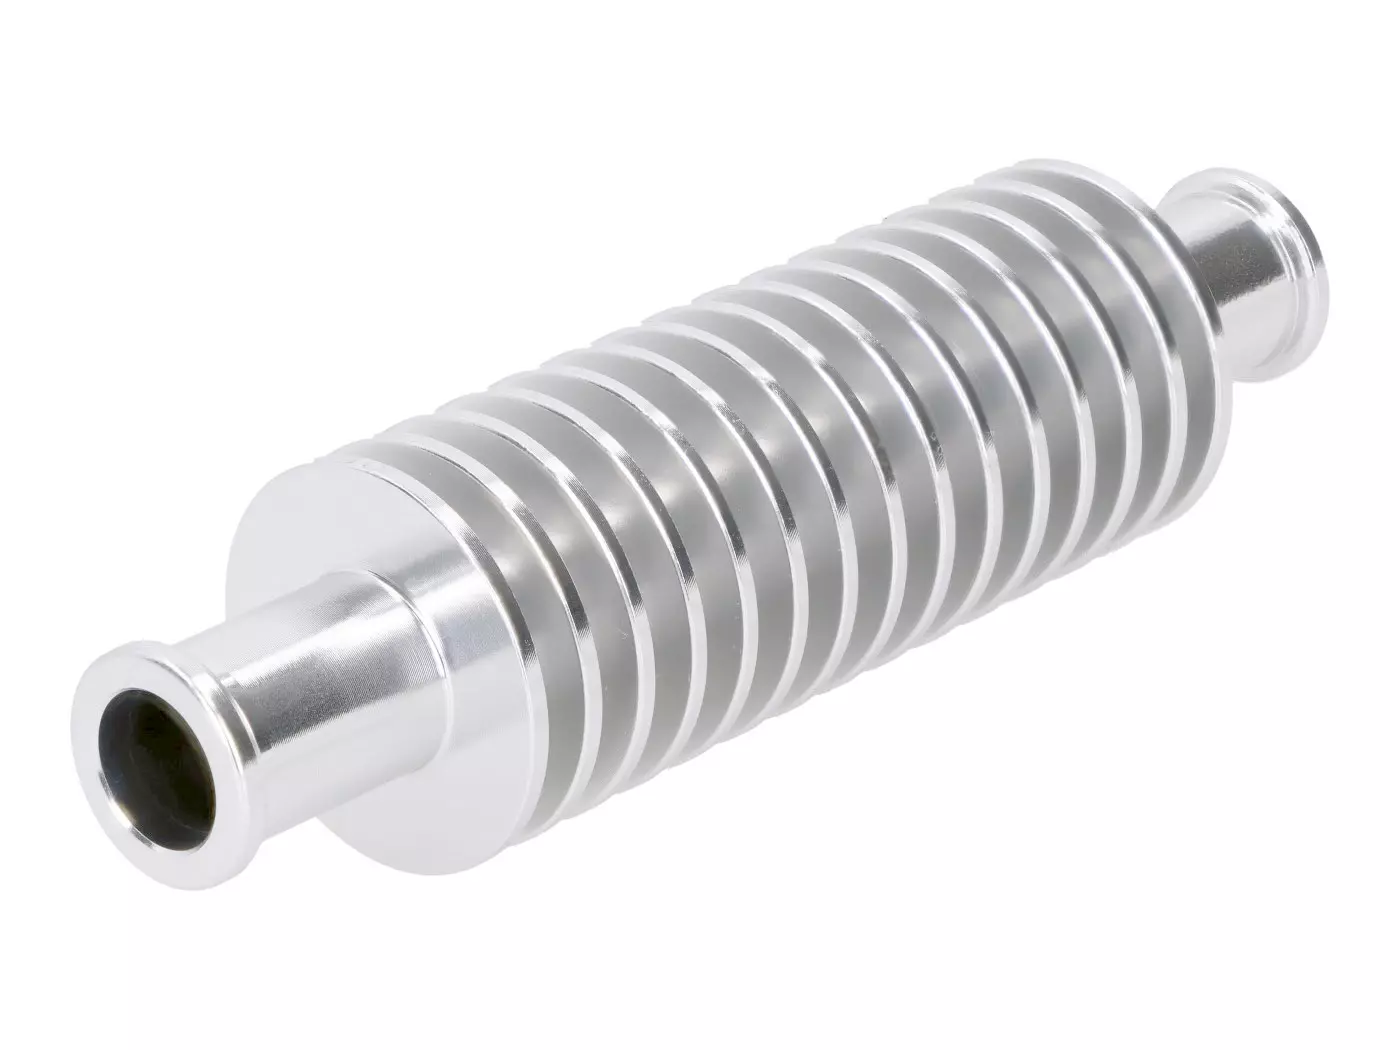 DurchlaufRadiateur / MiniRadiateur Aluminium zilver rond (133mm) 17mm Slangaansluiting